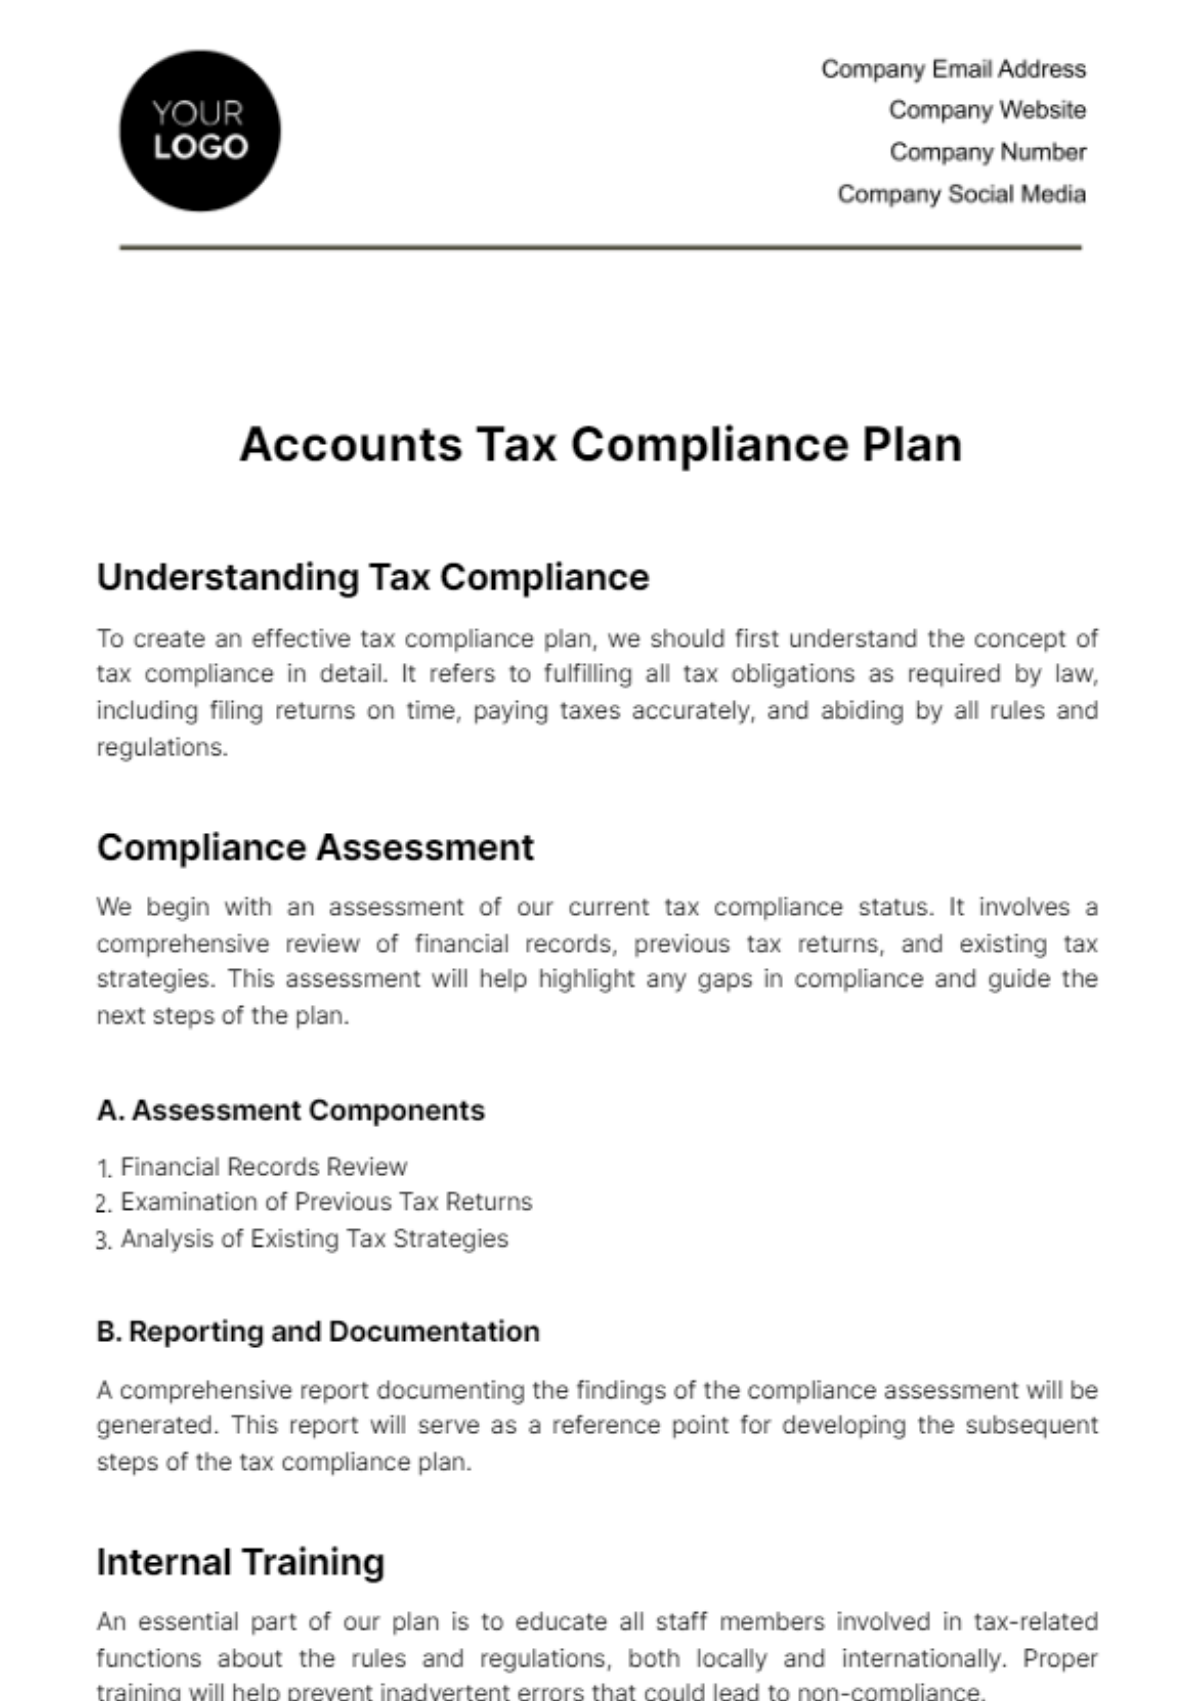 Accounts Tax Compliance Plan Template